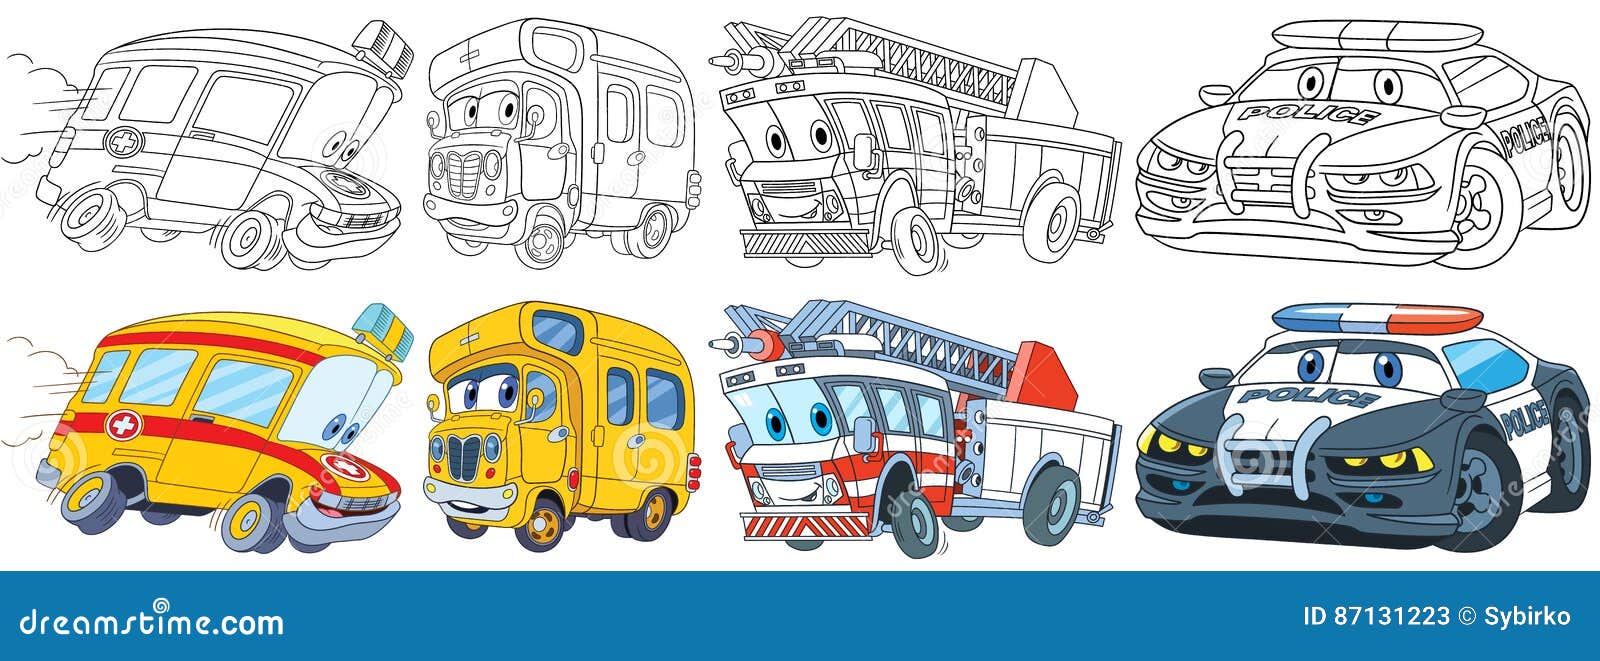 cartoon vehicles set stock vector illustration of cartoon